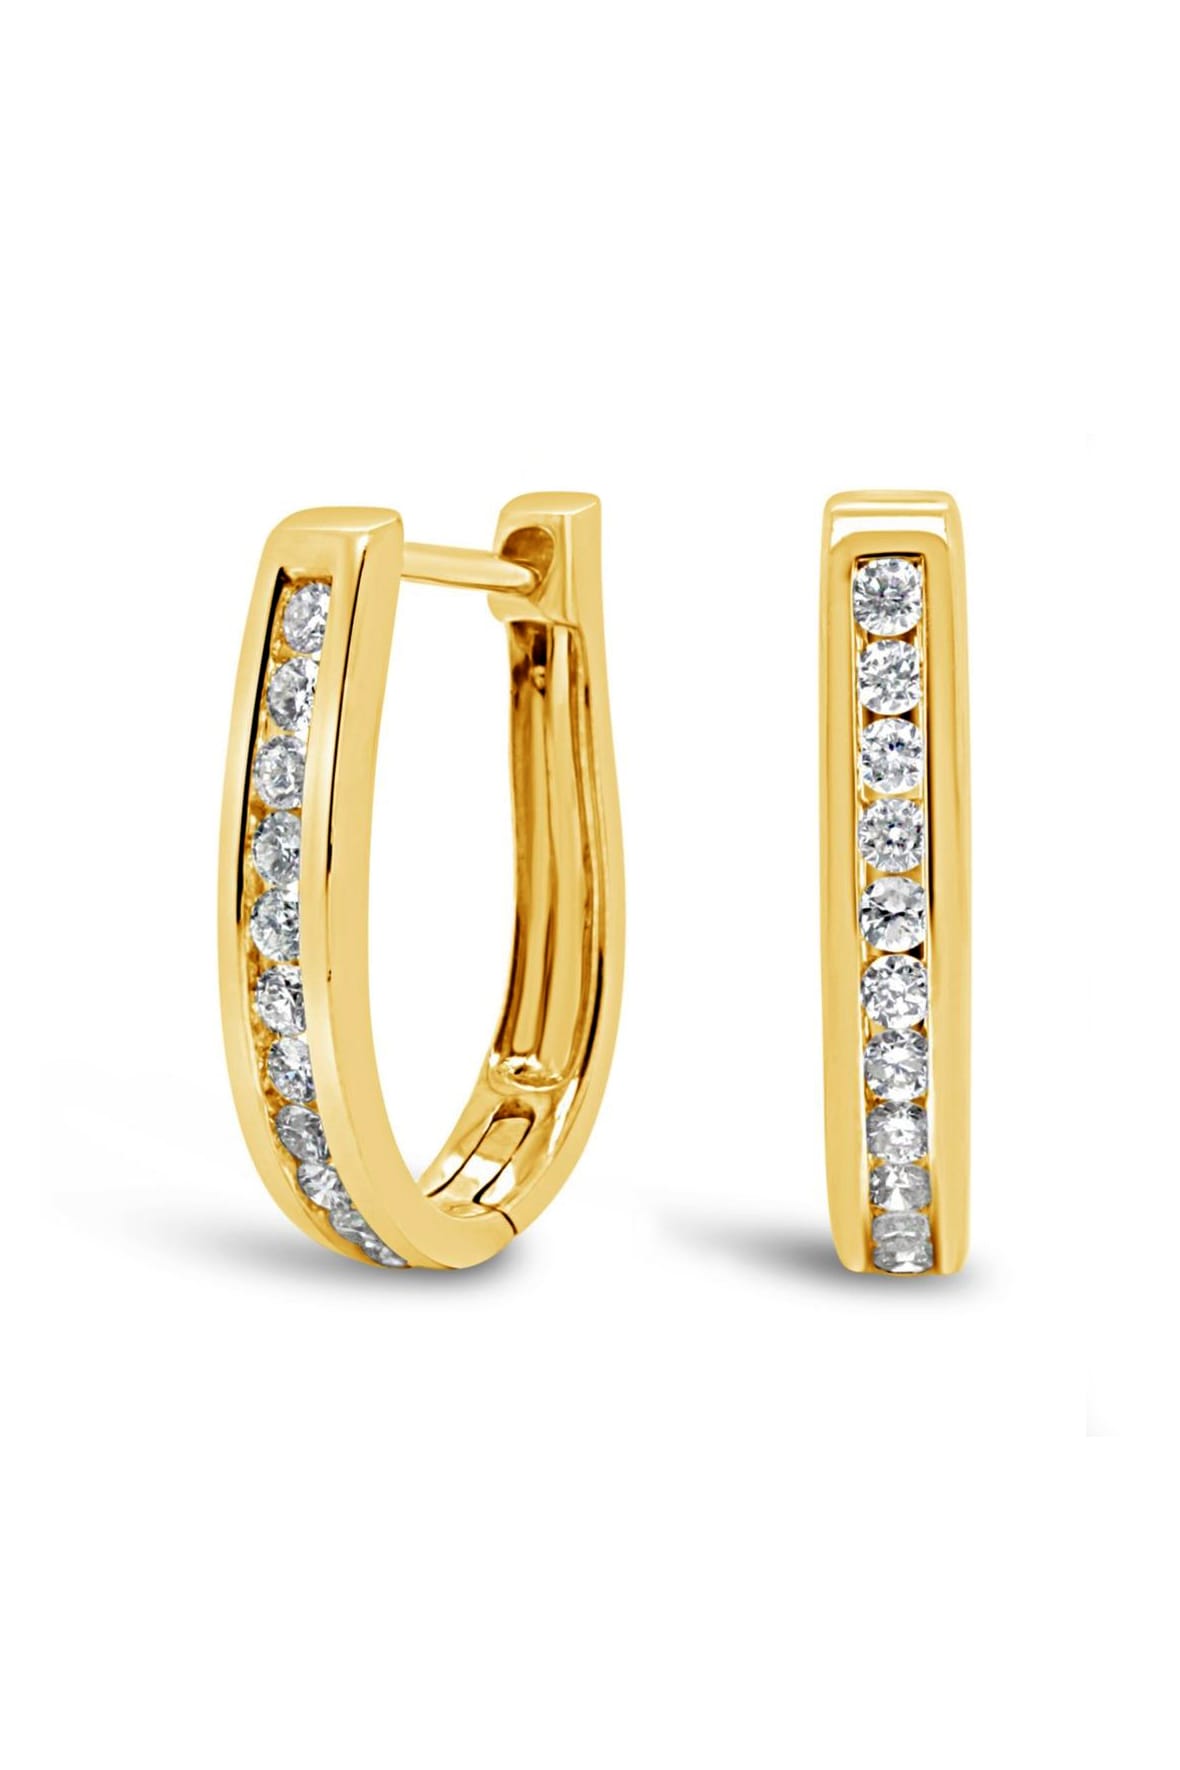 Stunning Diamond Huggie Earrings from LeGassick Diamonds and Jewellery Gold Coast, Australia